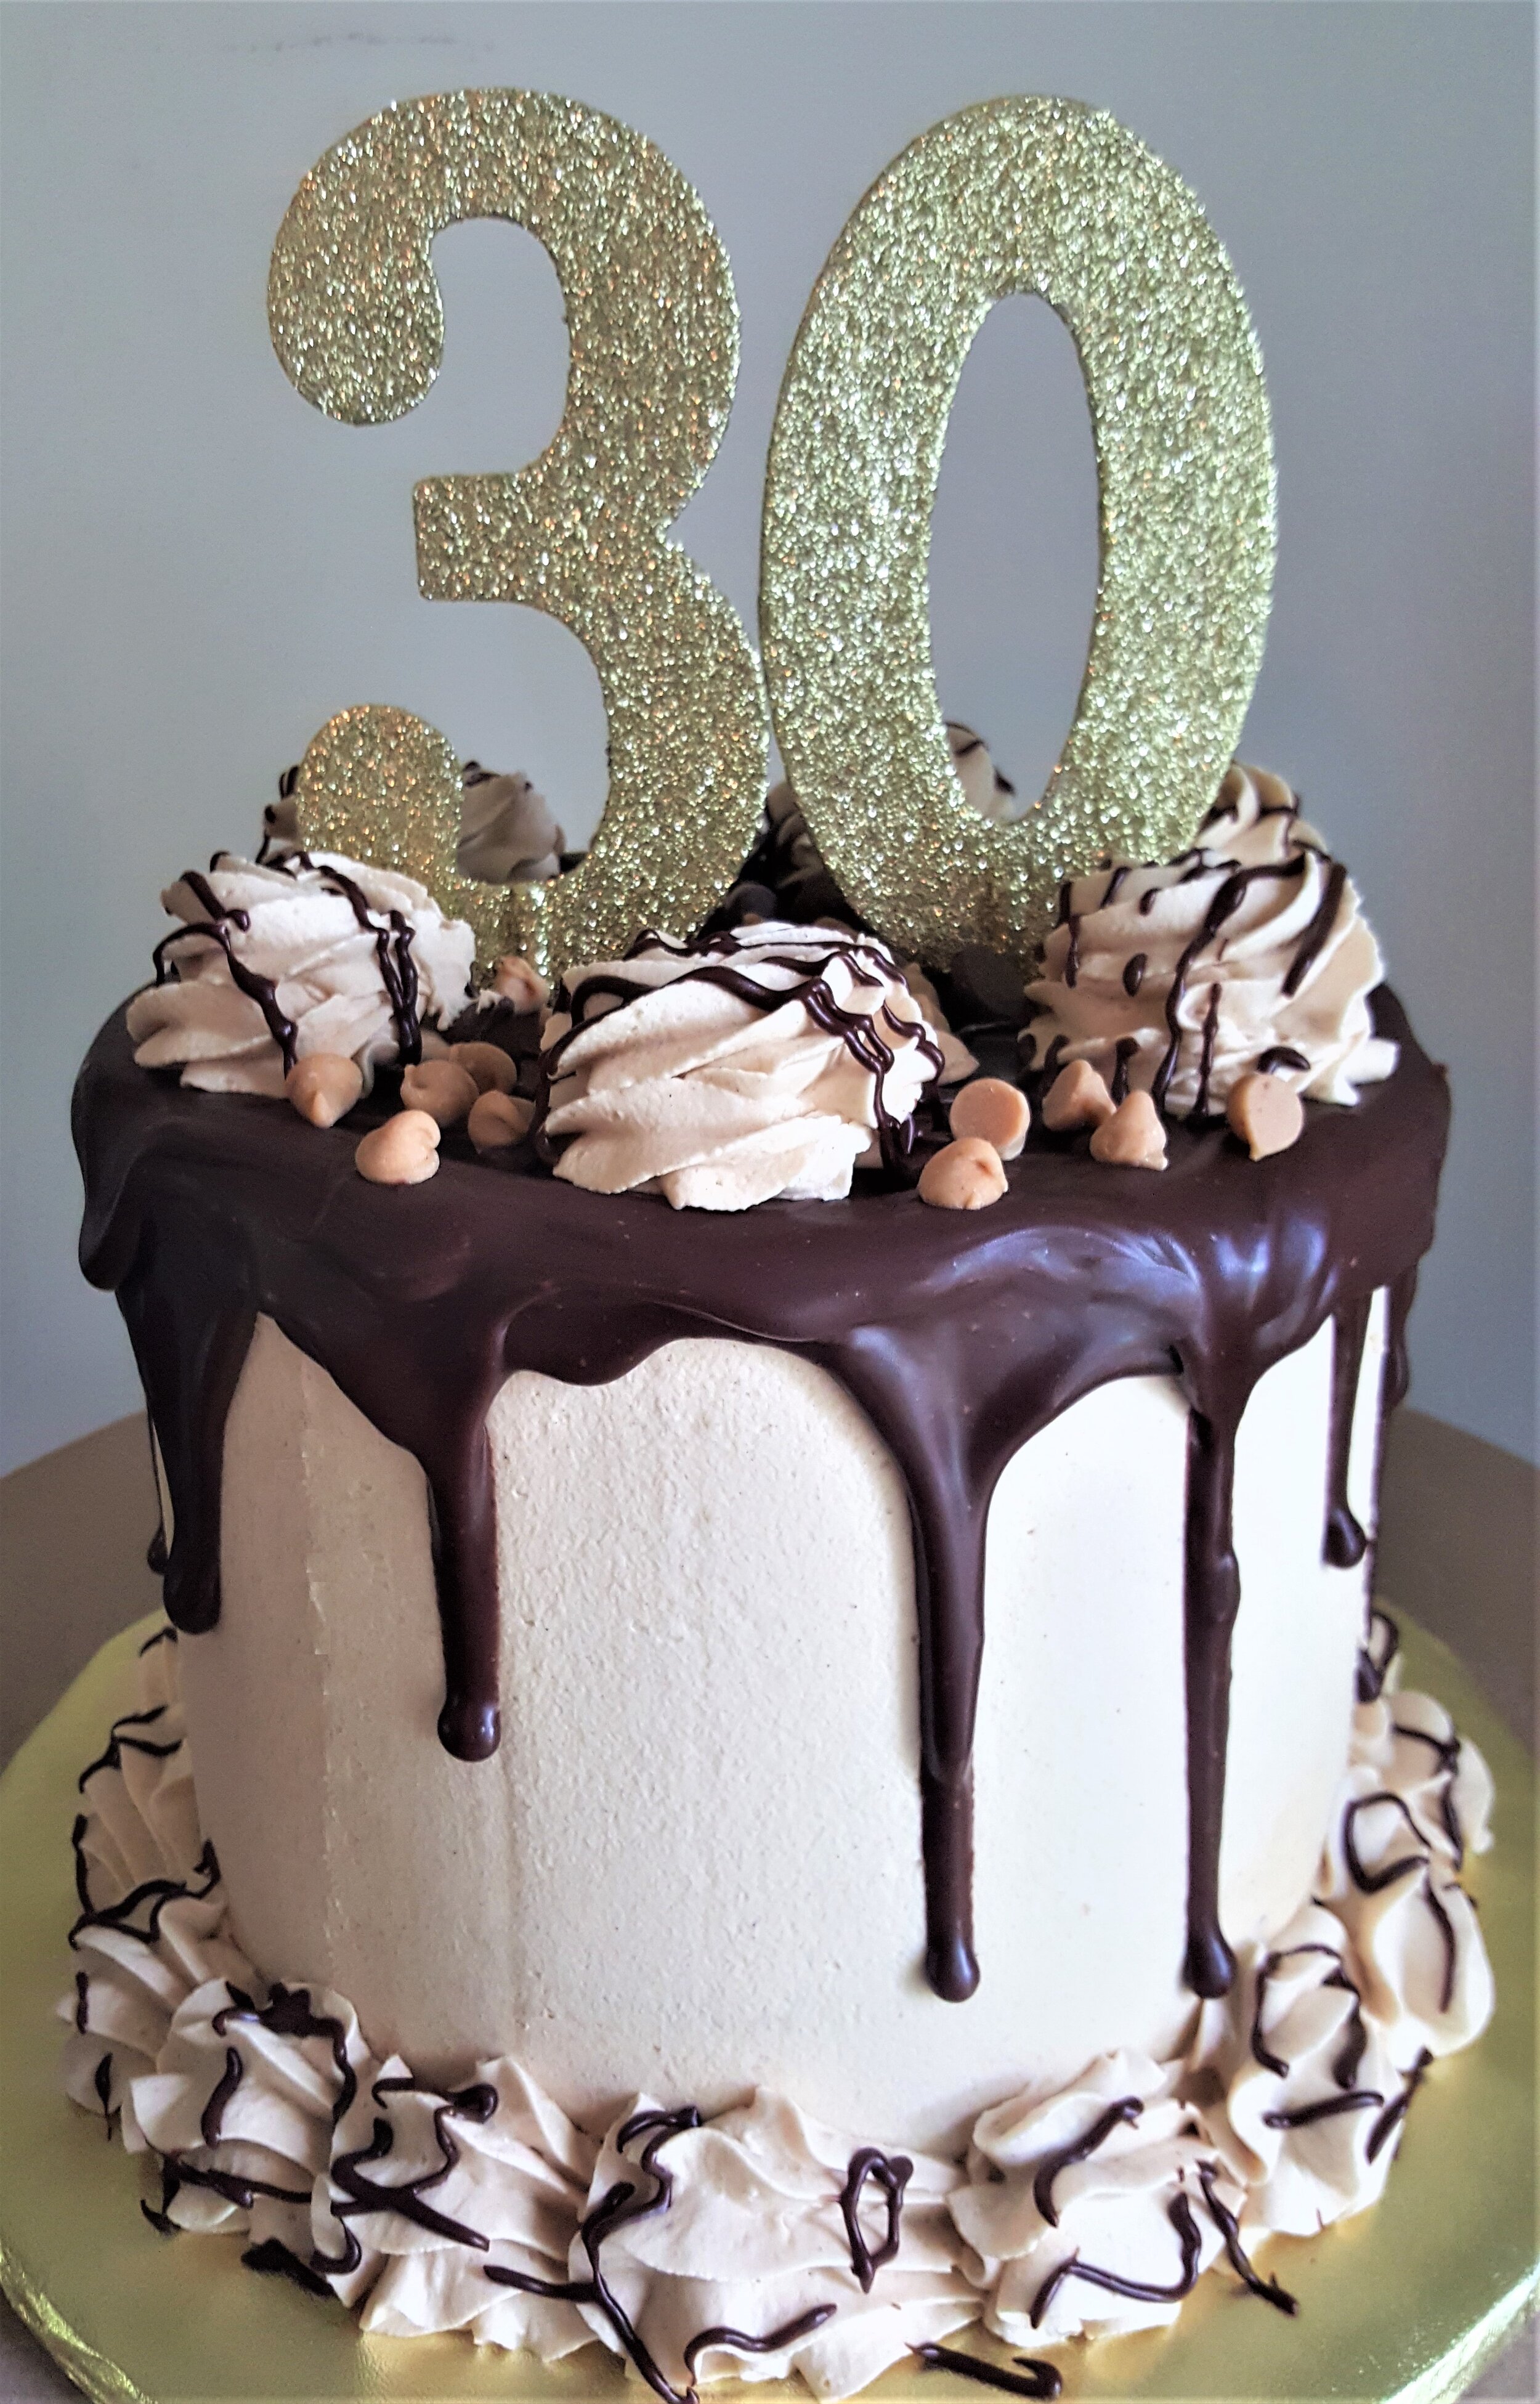 Chicago_Bakery-Birthday_Cake.jpg